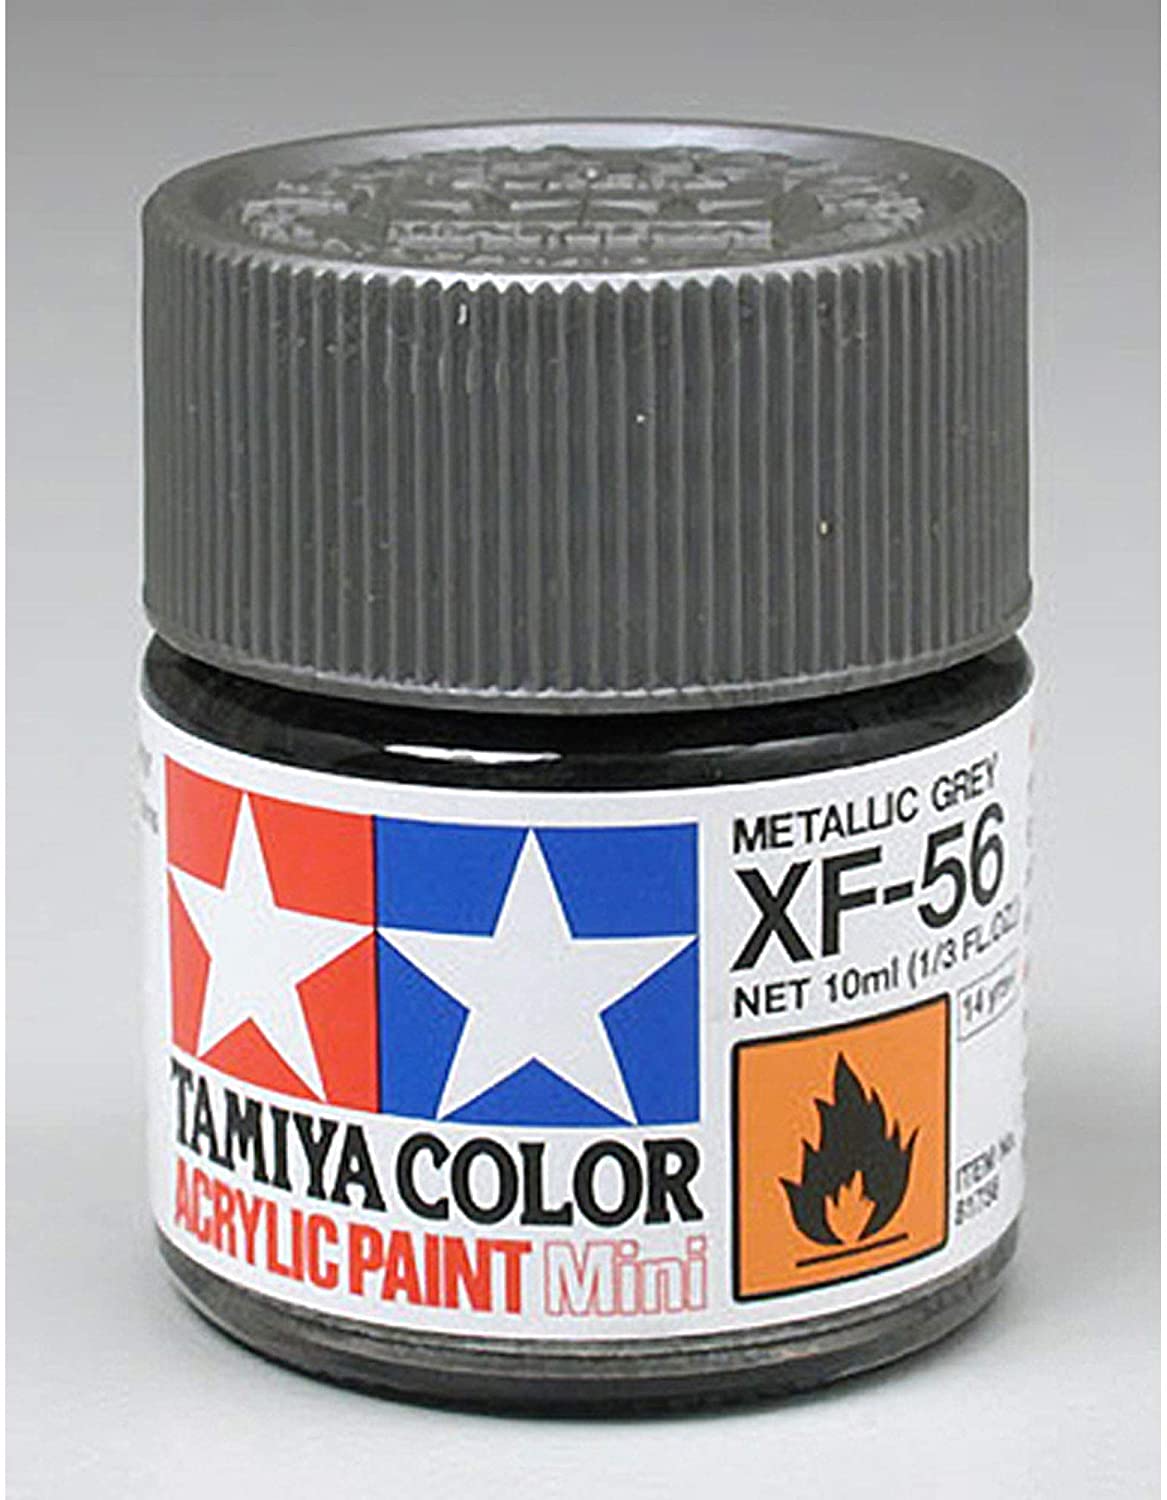 Tamiya Acrylic Mini 10ml XF56 Grey Metallic